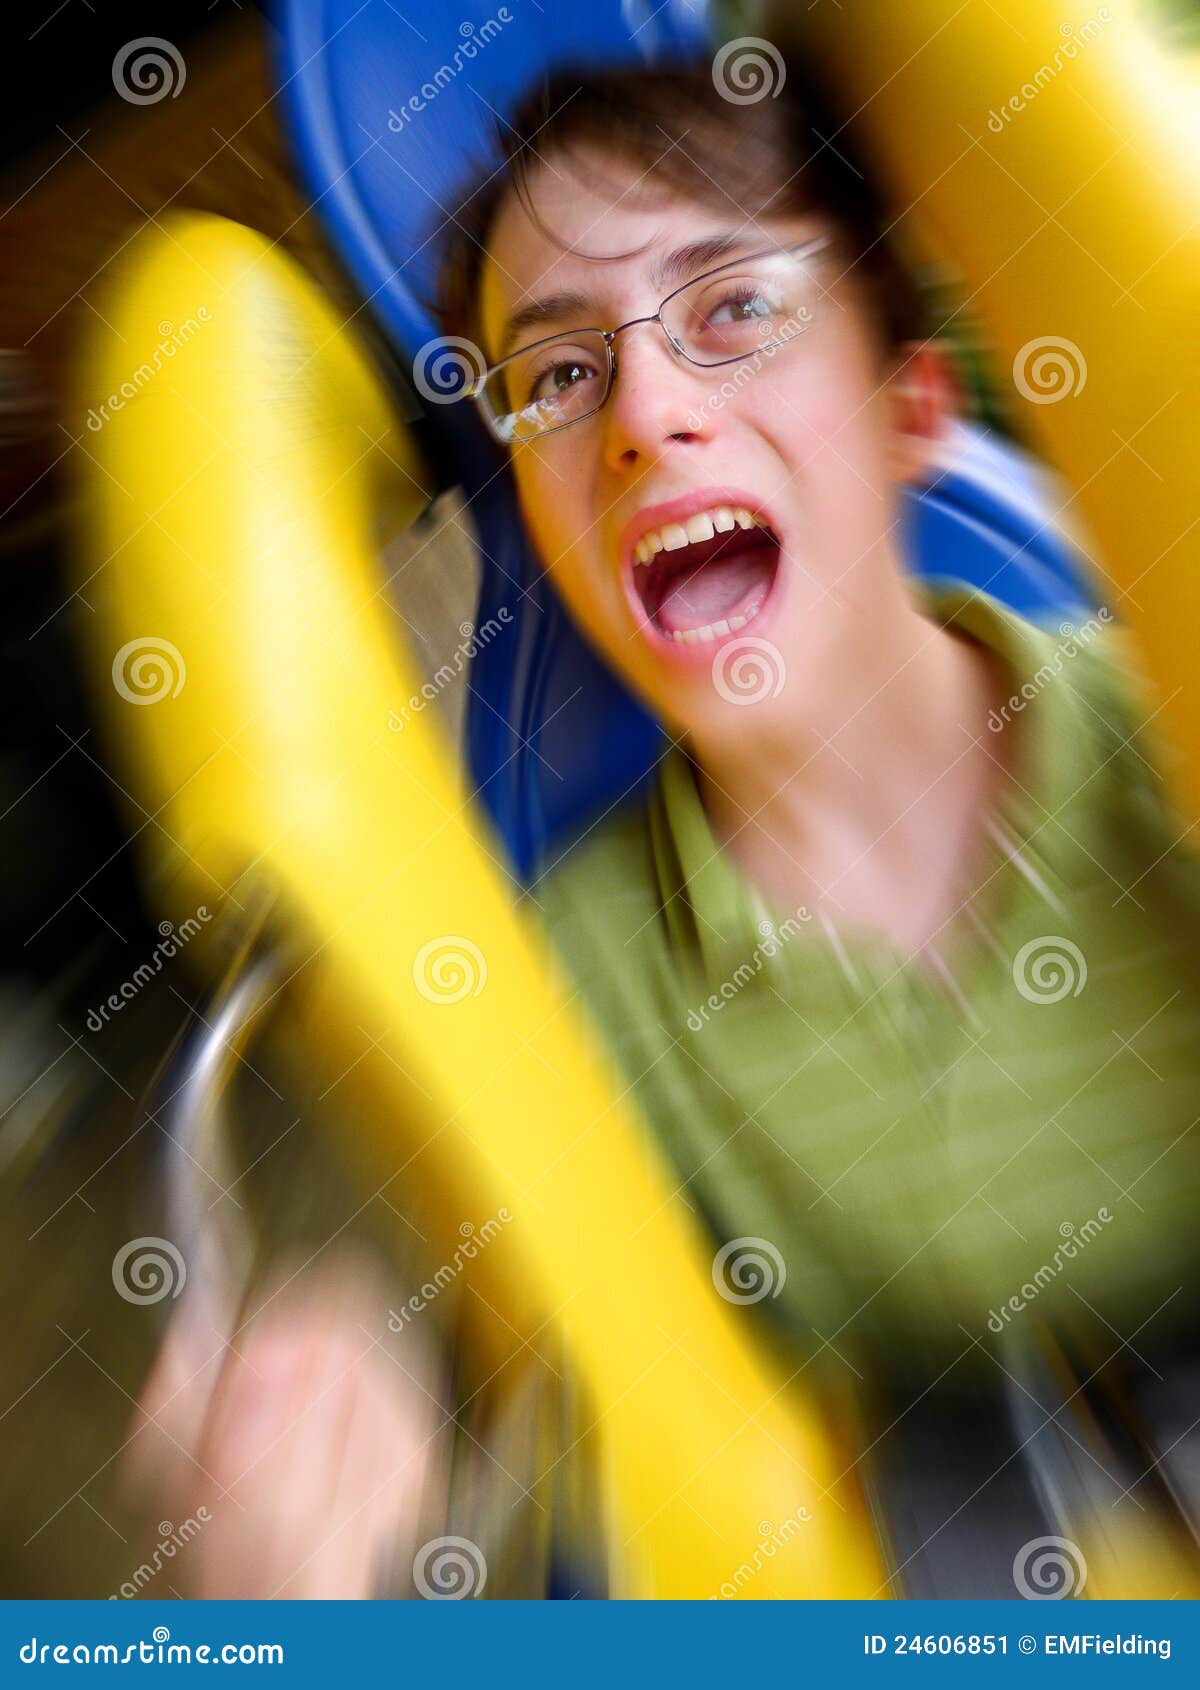 screaming boy riding on a roller coaster